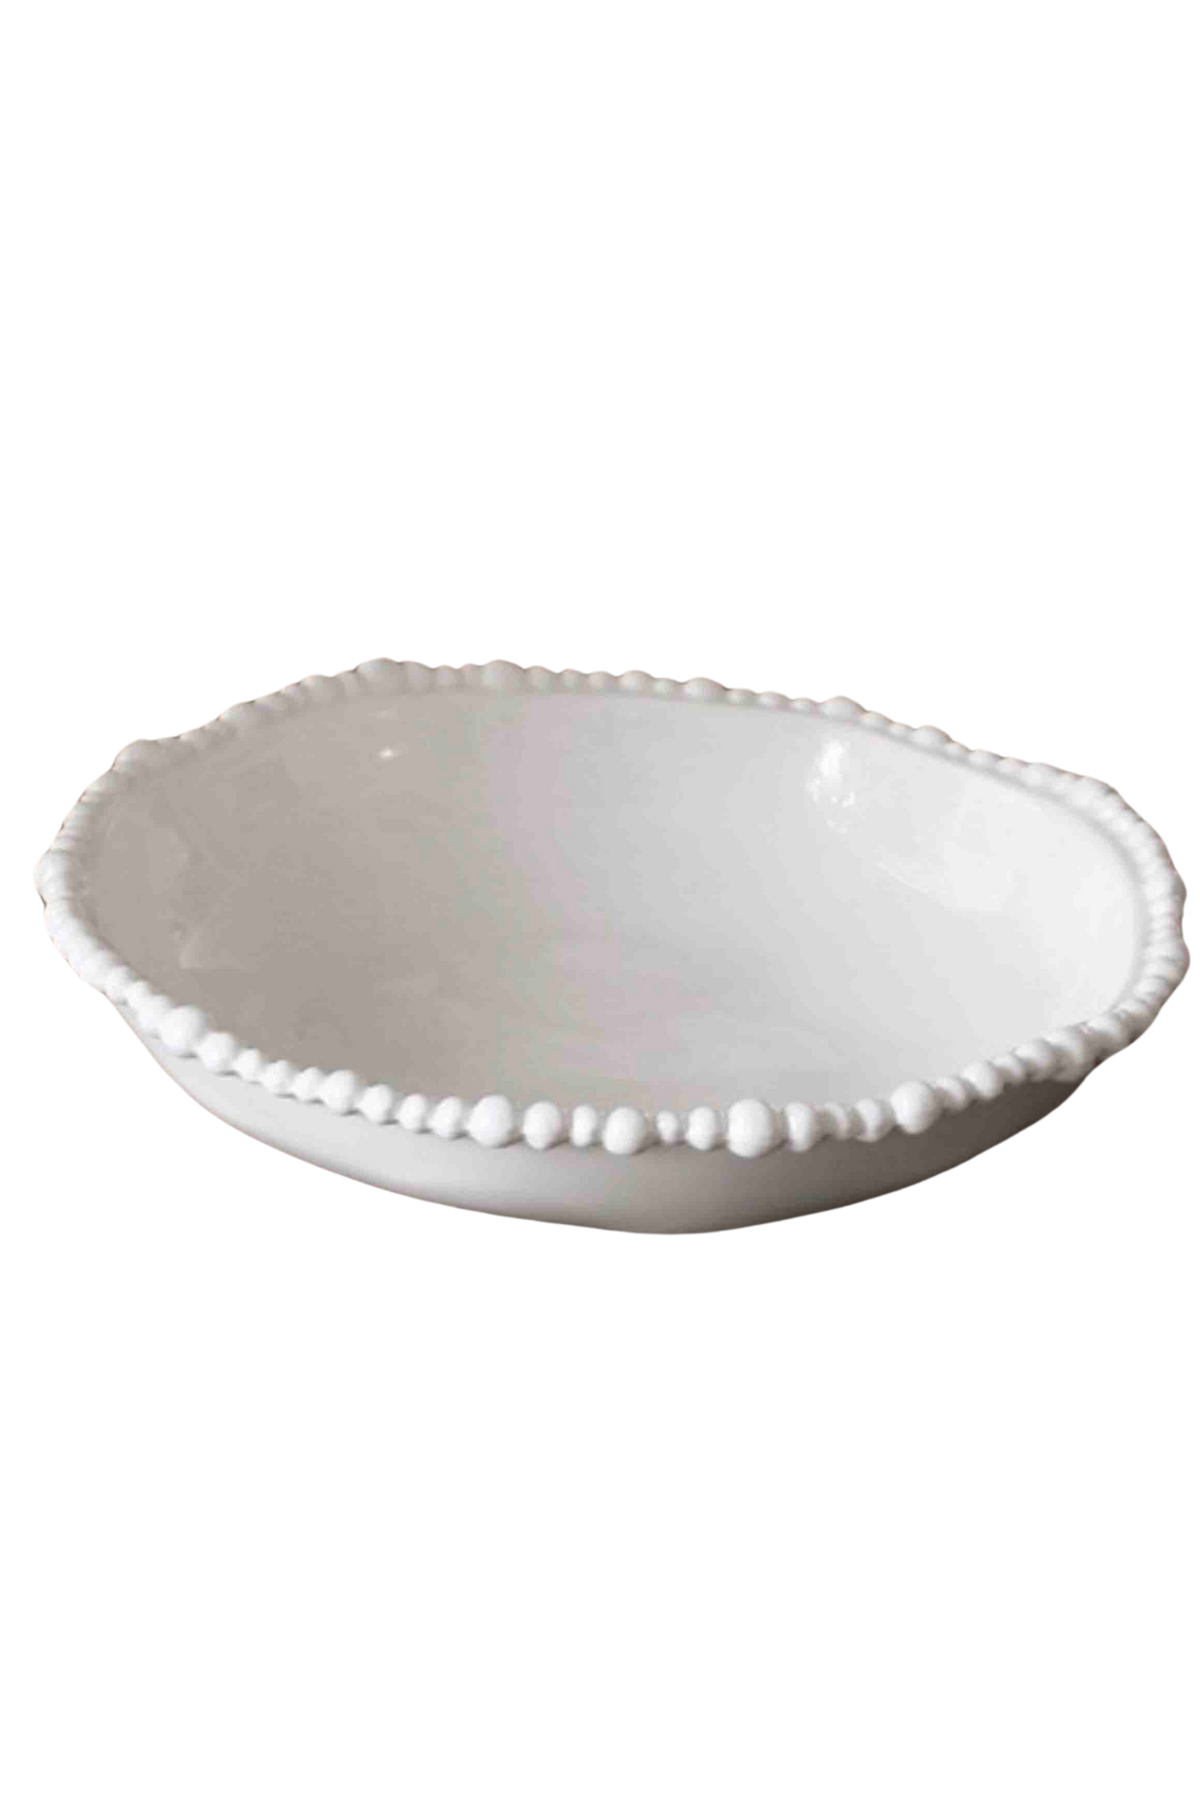 VIDA Alegria Pasta Bowl Set of 4 by Beatriz Ball in the white luxury melamine